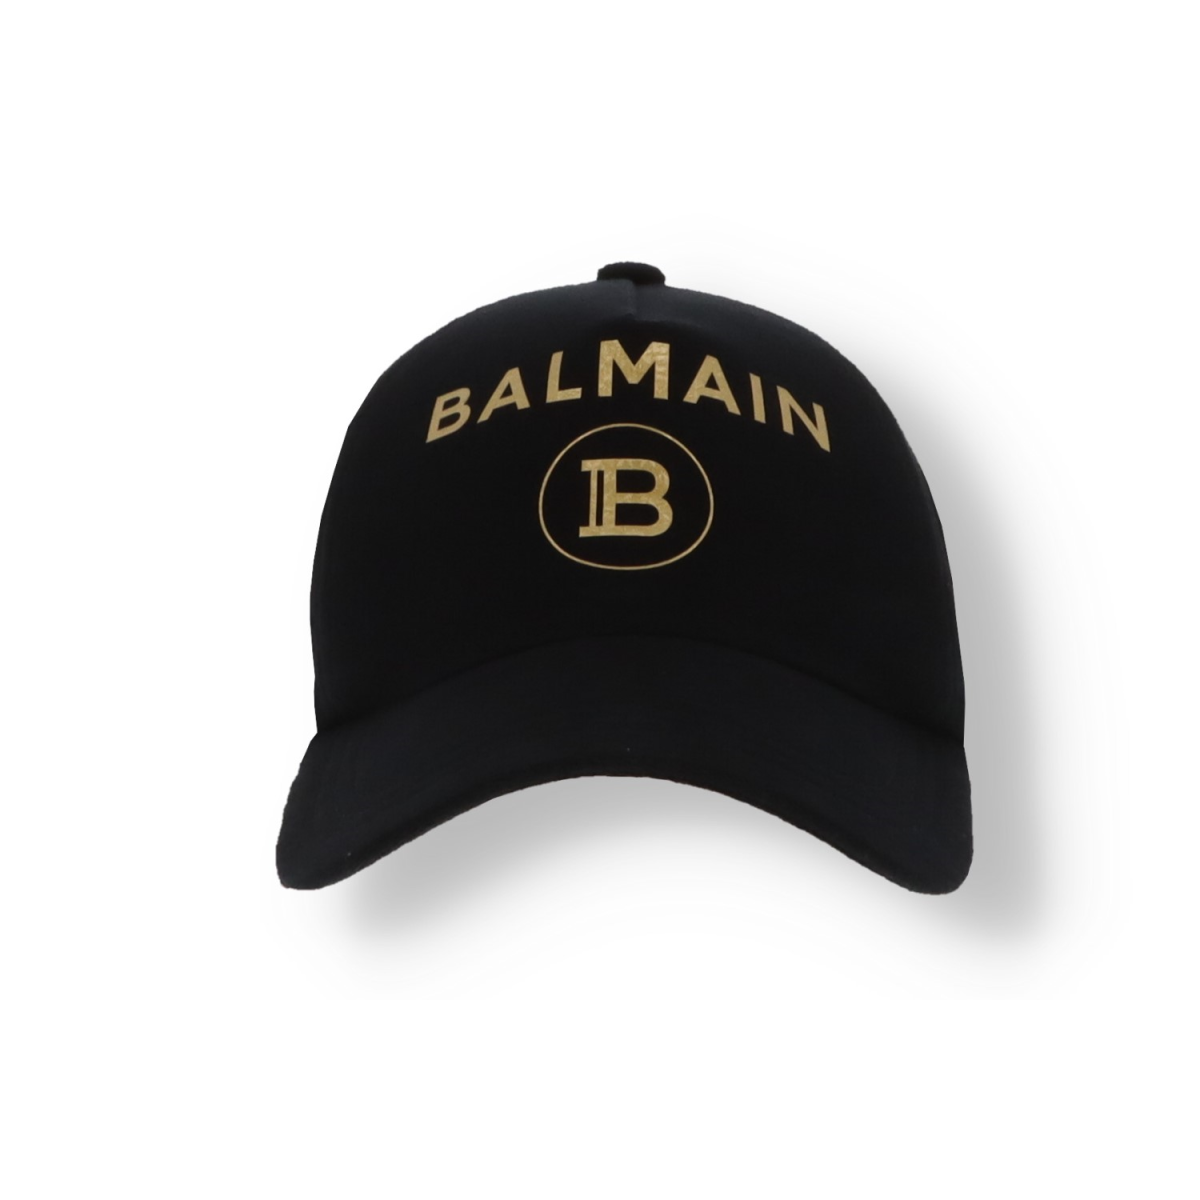 Balmain Cap